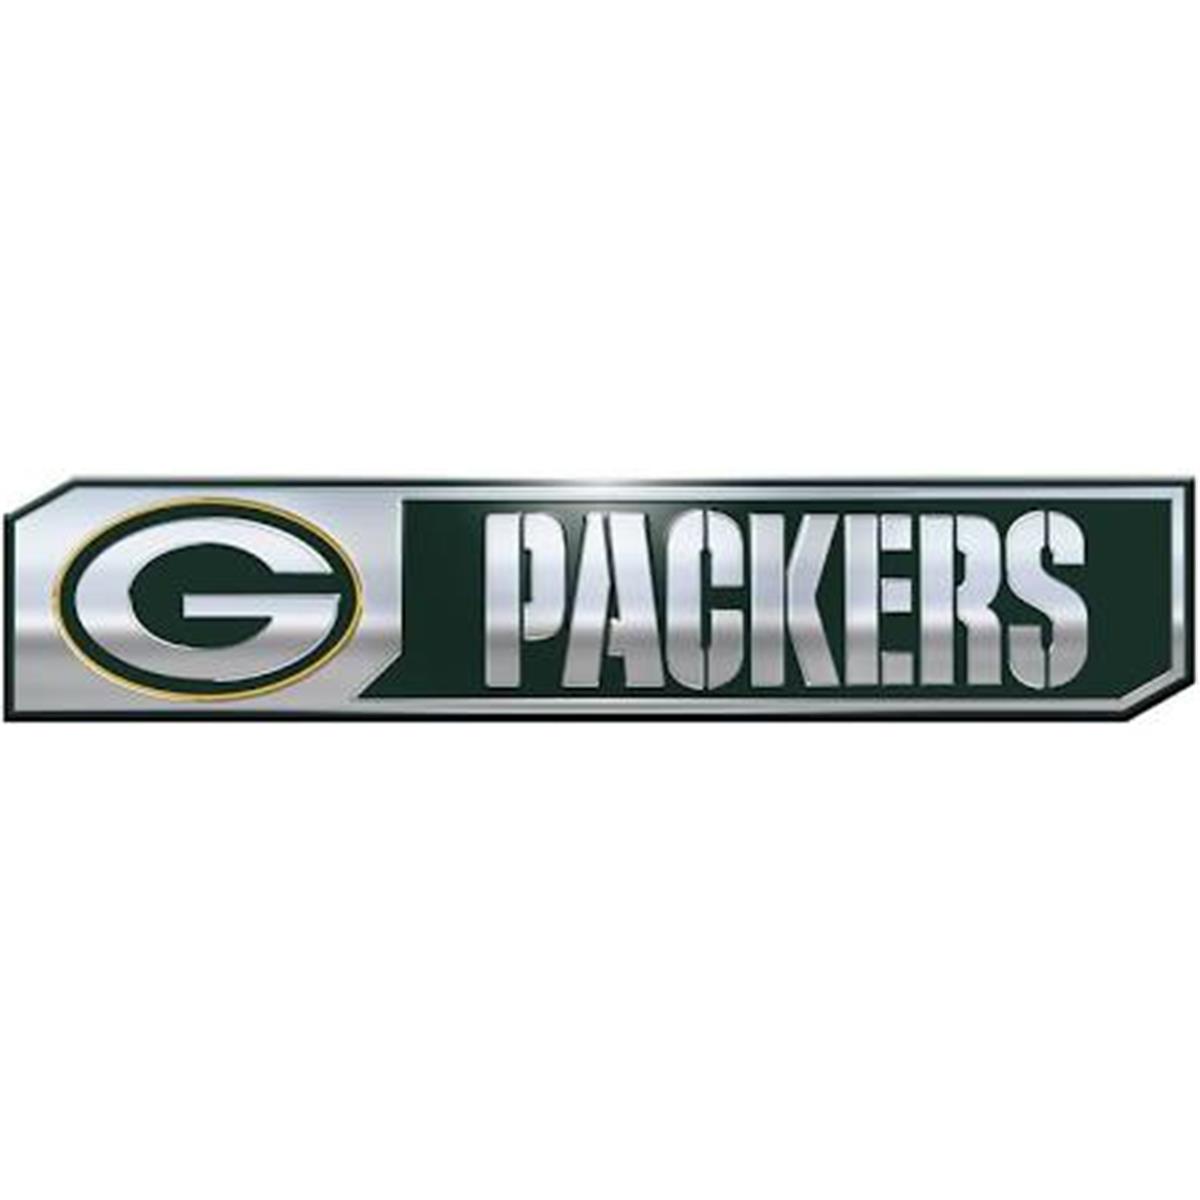 Team ProMark FANMATS NFL - Green Bay Packers 2 Piece Heavy Duty Alumnium Truck Emblem Set, 1.75" x 8"